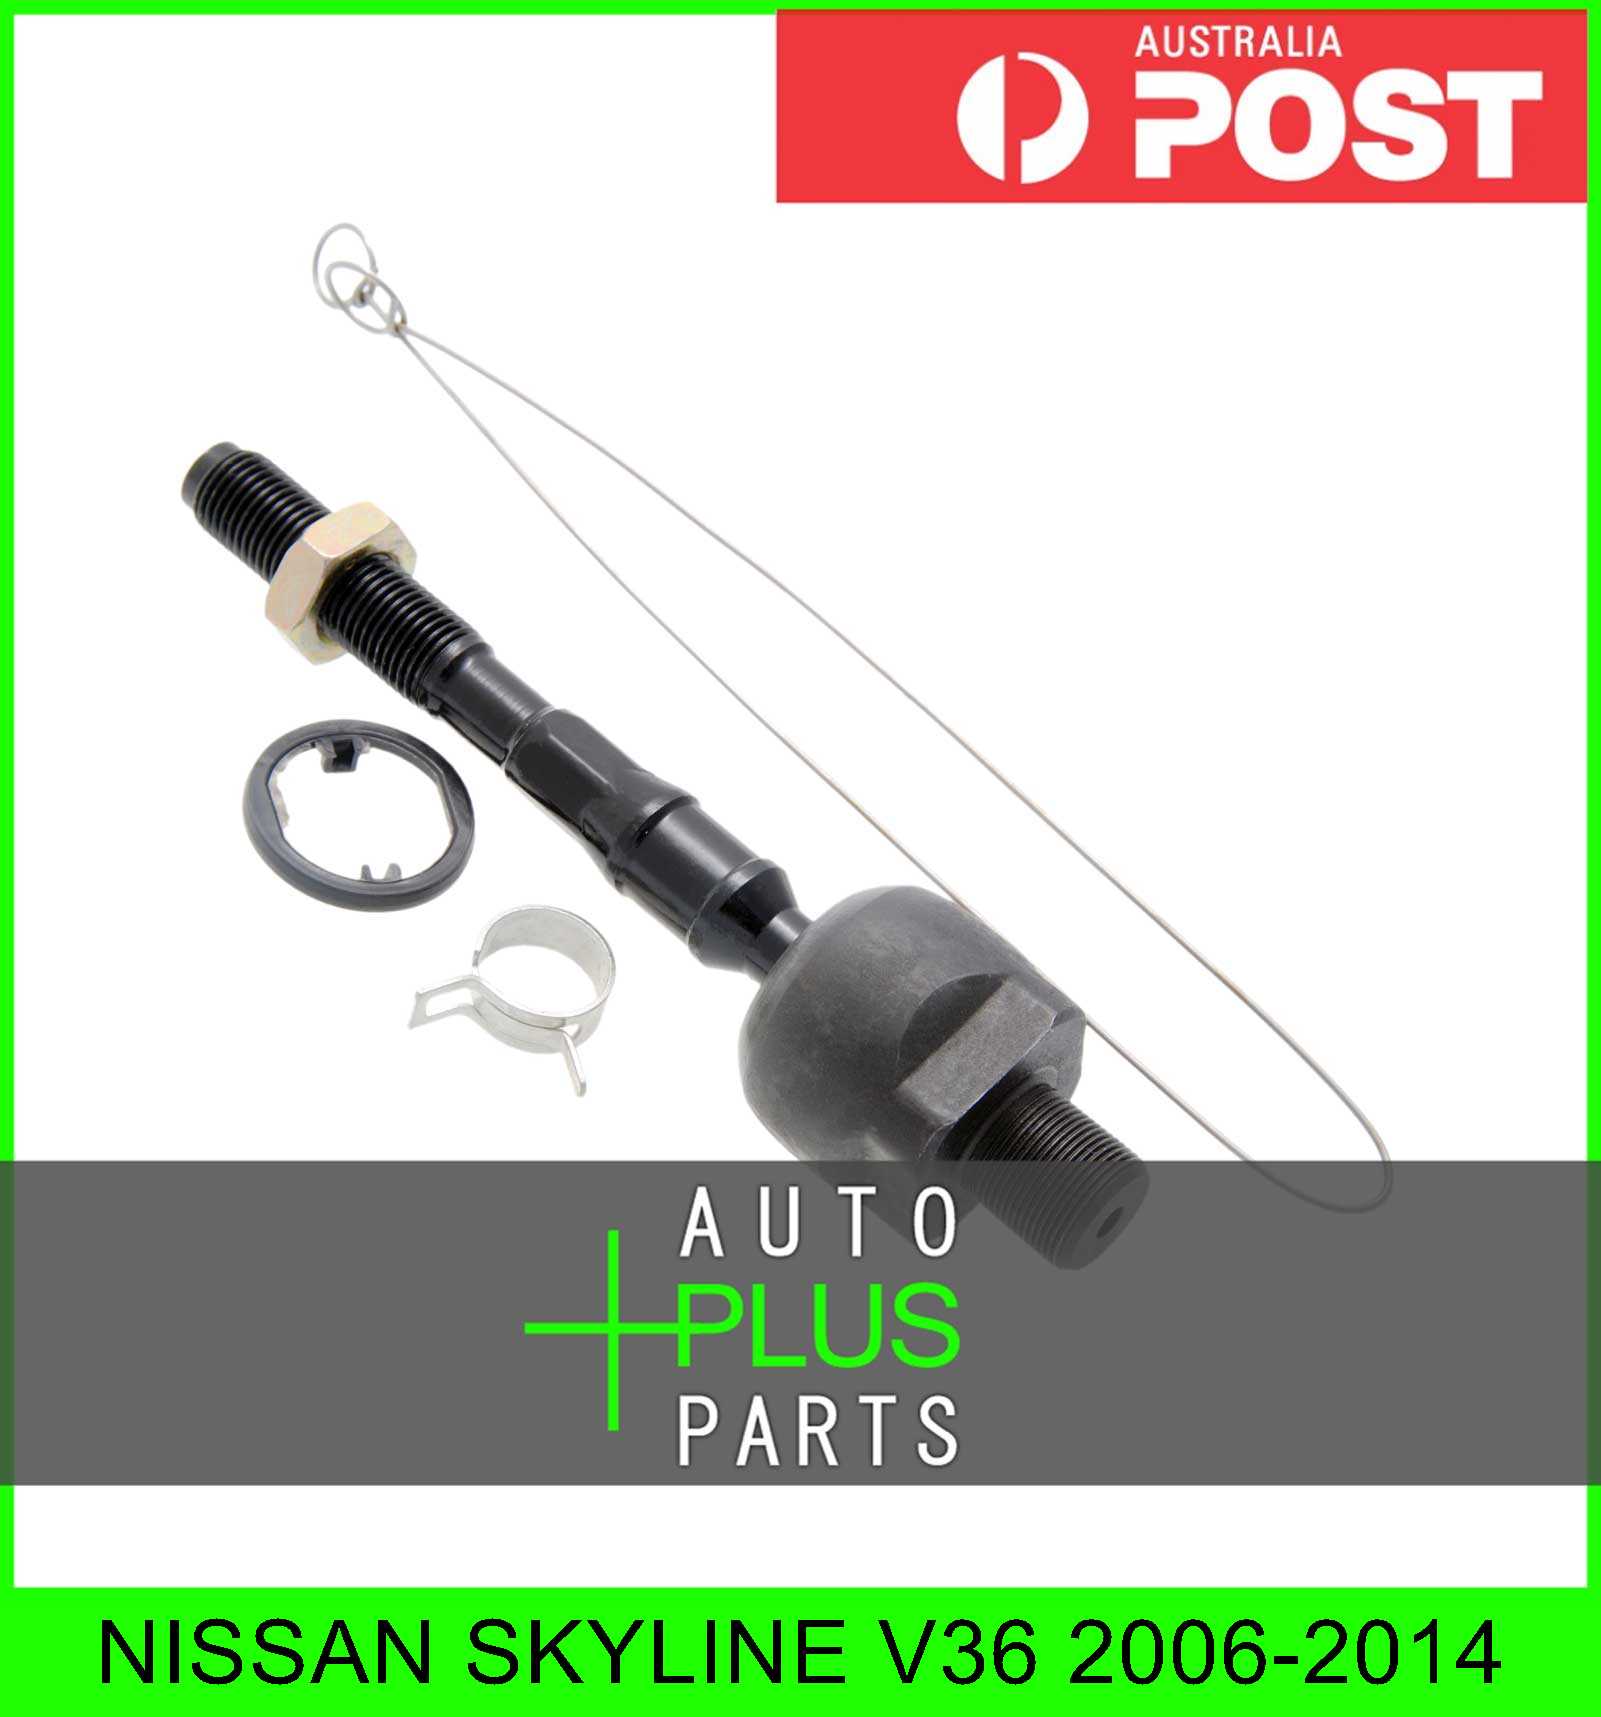 Fits NISSAN SKYLINE V35 2001-2007 Steering Rack End Tie Rod